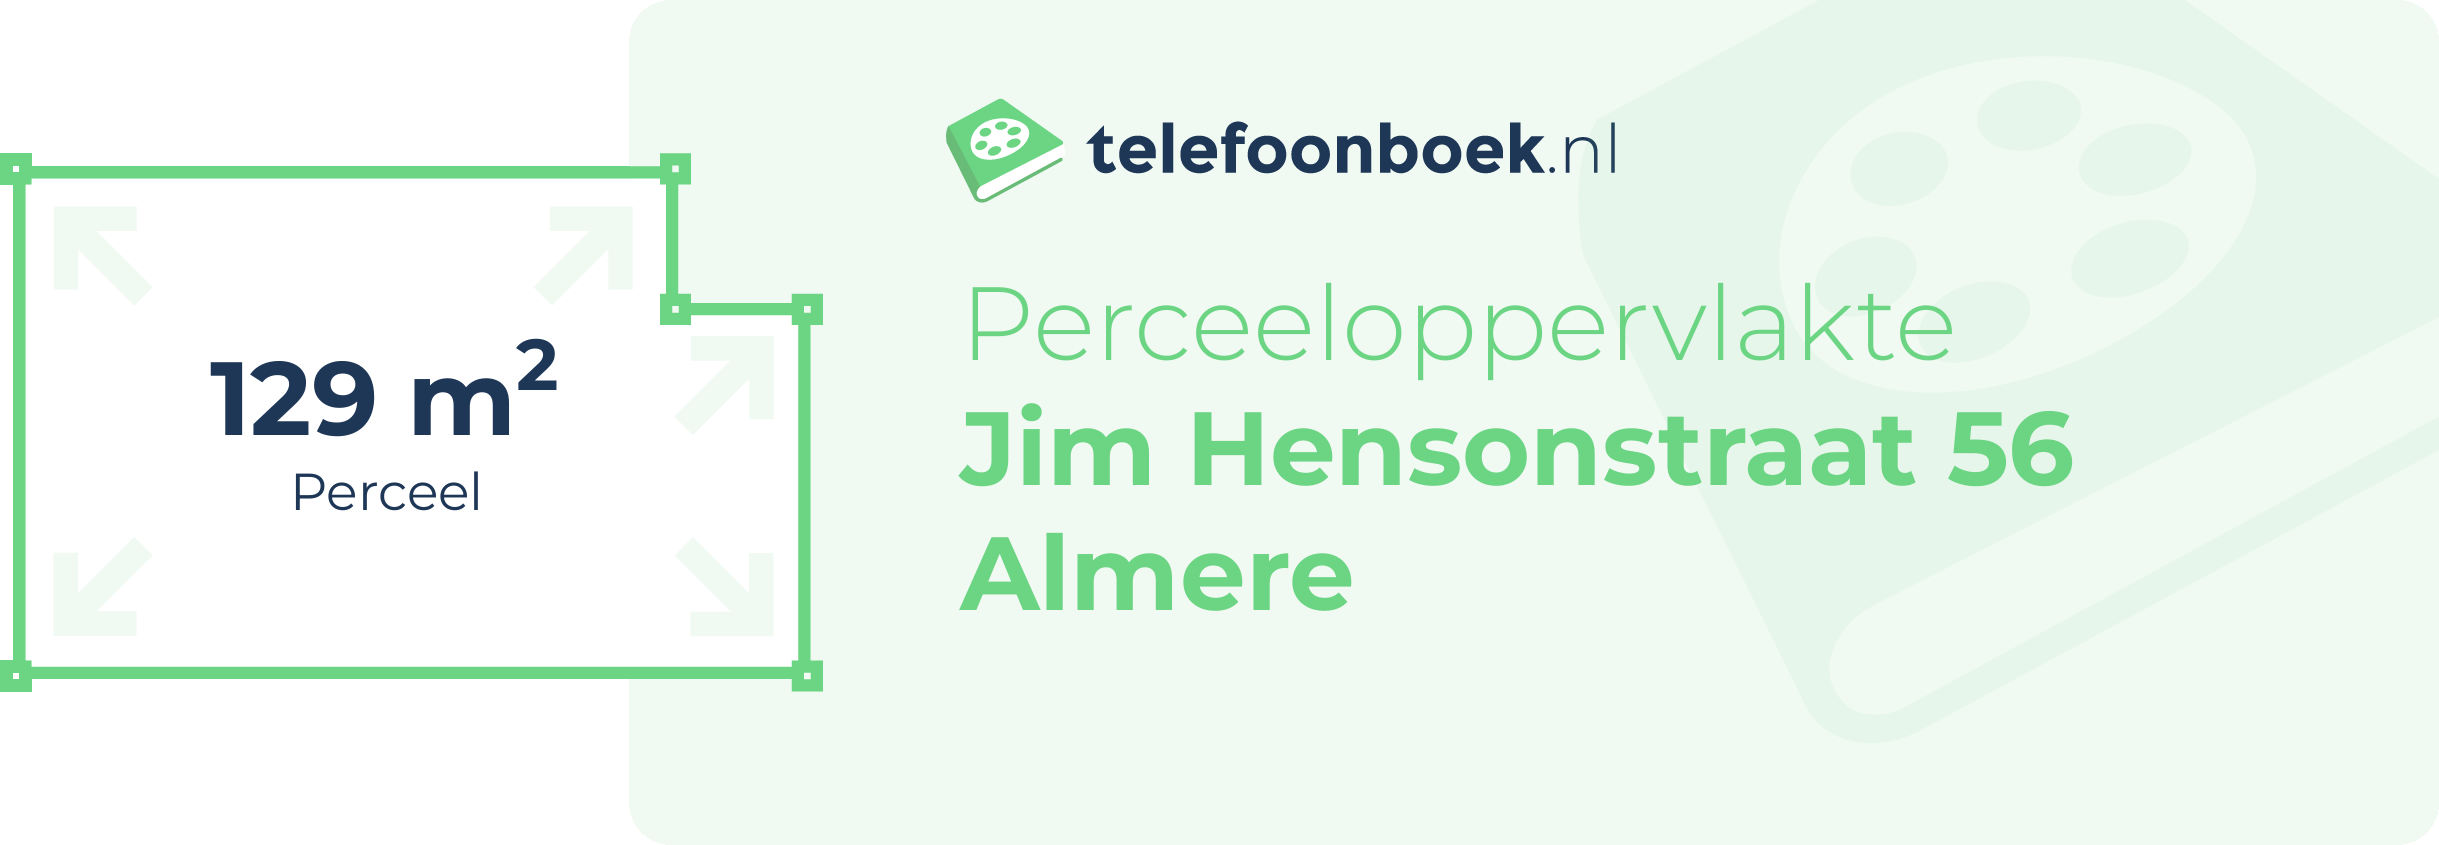 Perceeloppervlakte Jim Hensonstraat 56 Almere